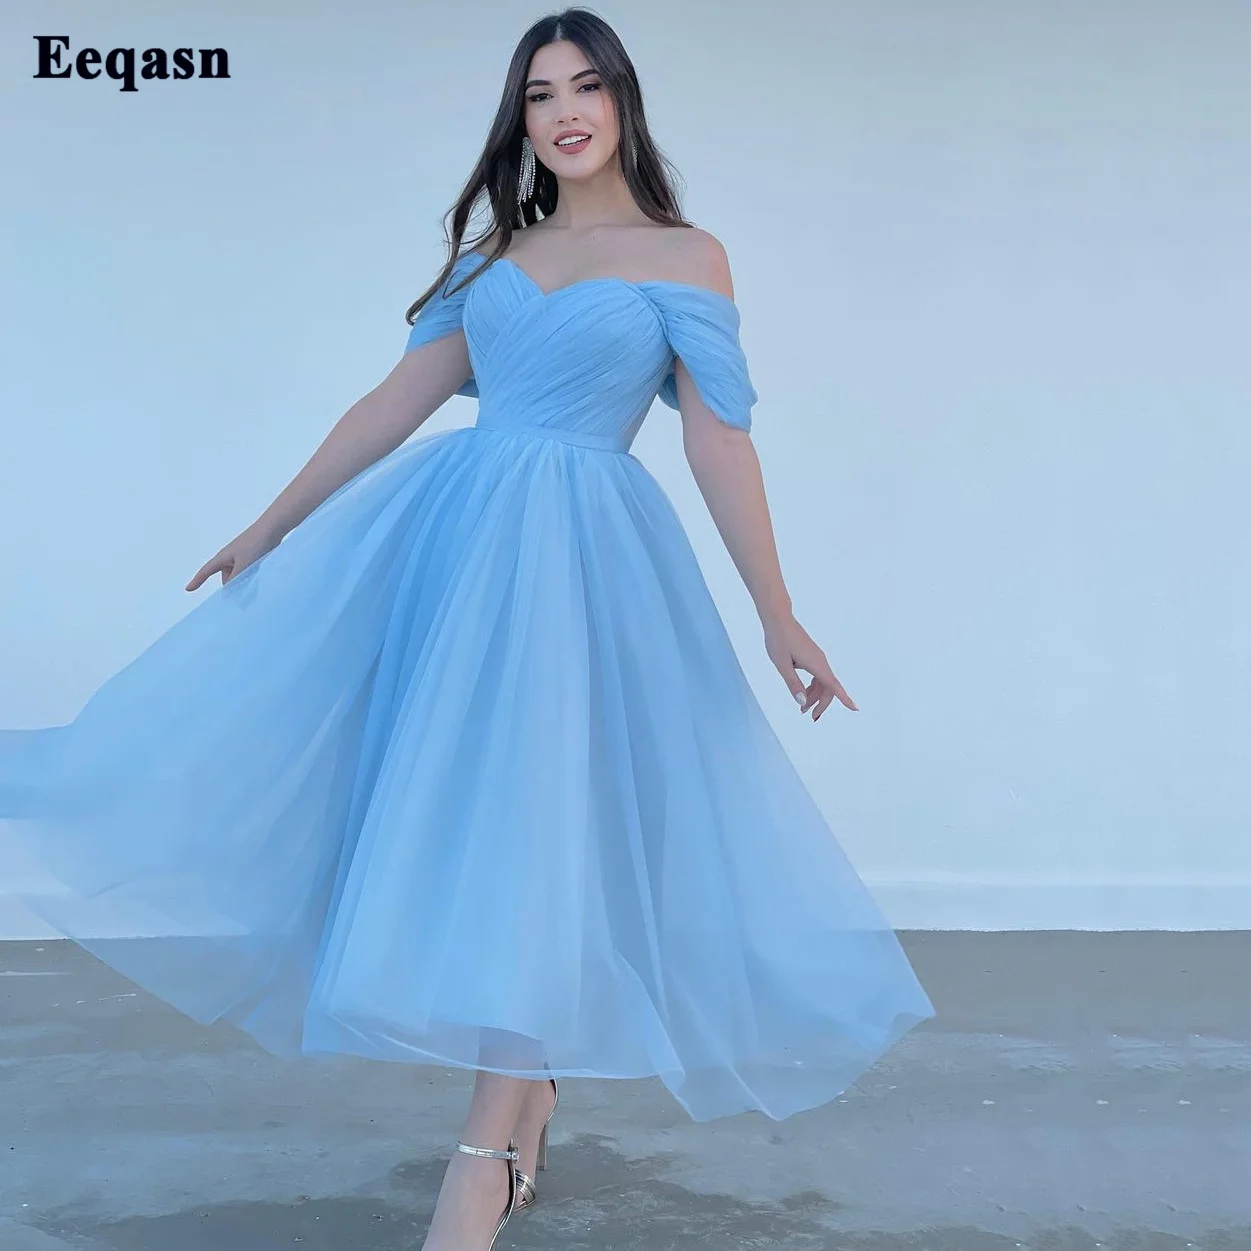 Eeqasn Simple Sky Blue Short Prom Dresses Pleat Off The Shoulder Tea-Length Evening Gowns Formal Wedding Party Bridesmaid Dress